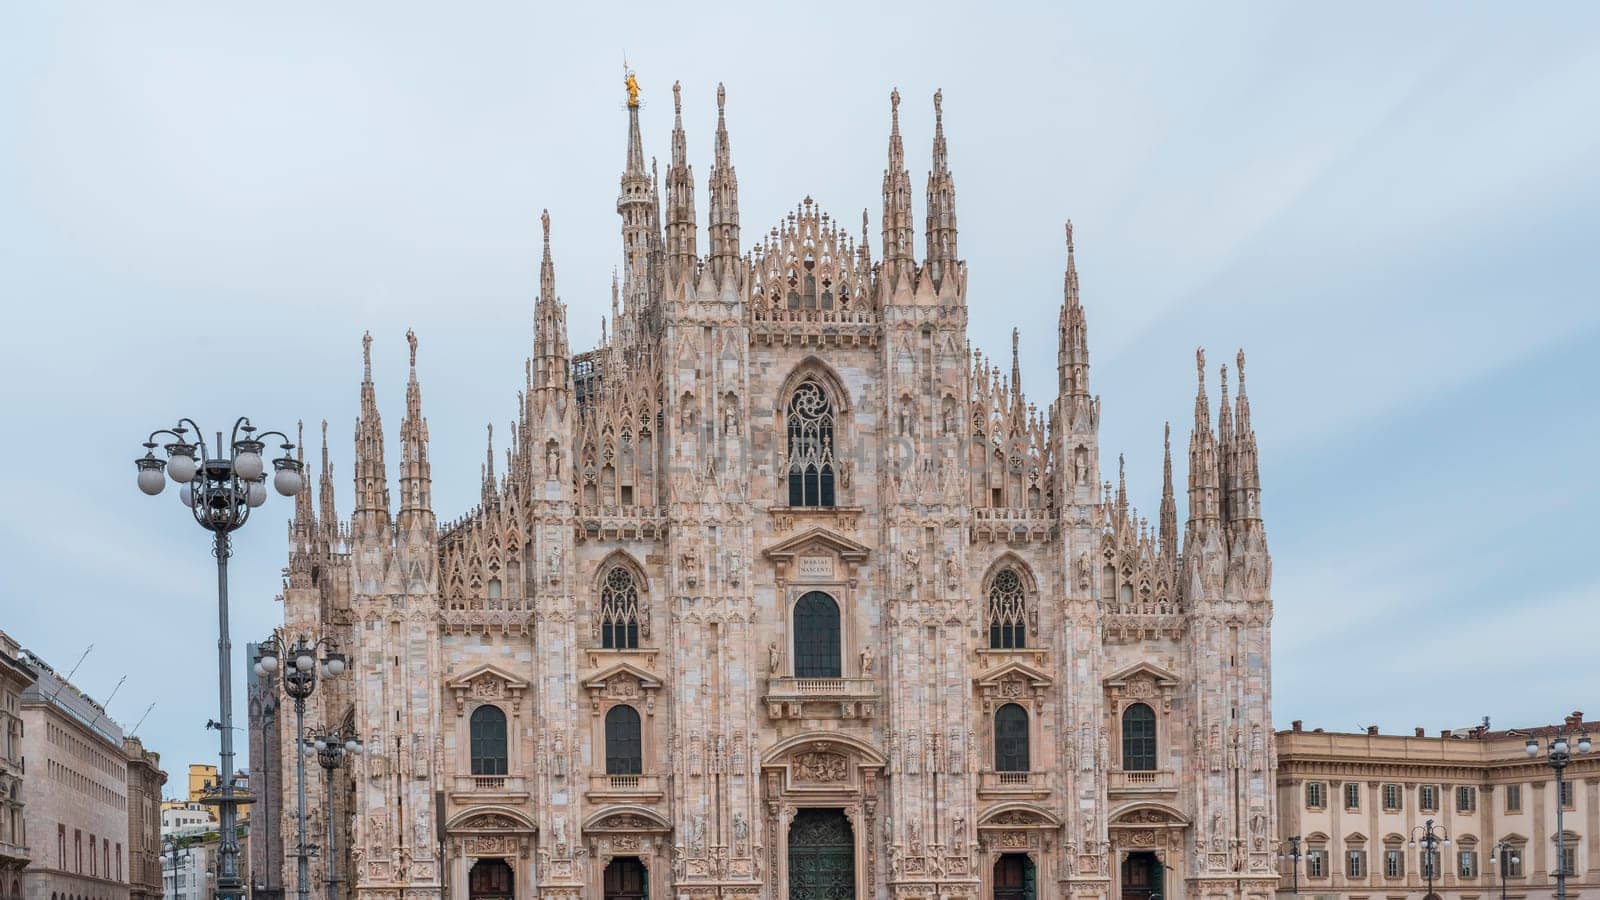 Wonderful Duomo Milan gothic cathedral by Robertobinetti70